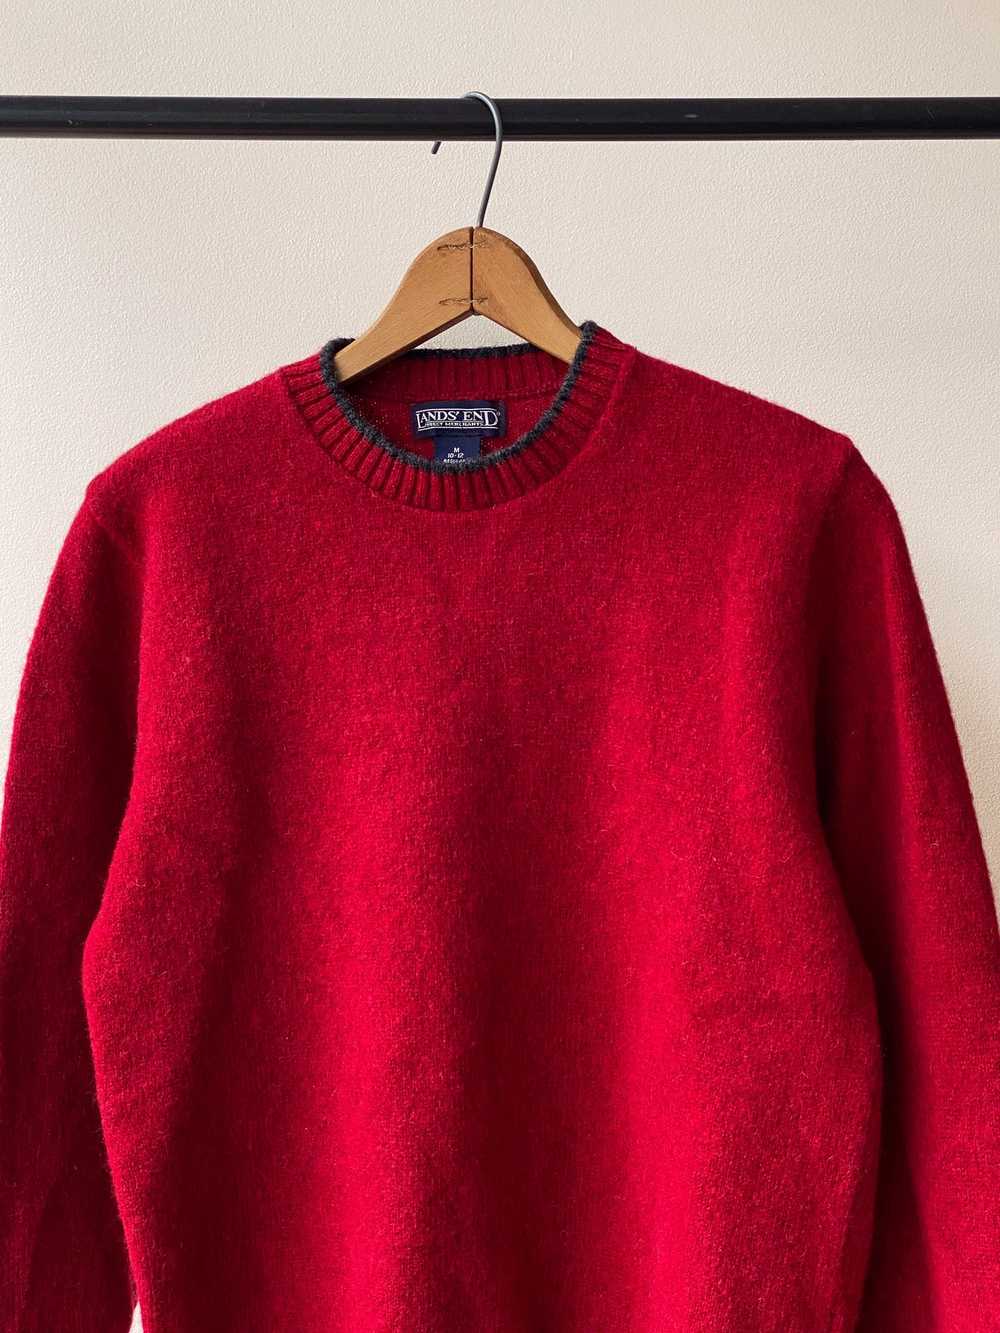 80's Lands' End Wool Knit Crewneck Sweater—[S/M] - image 2